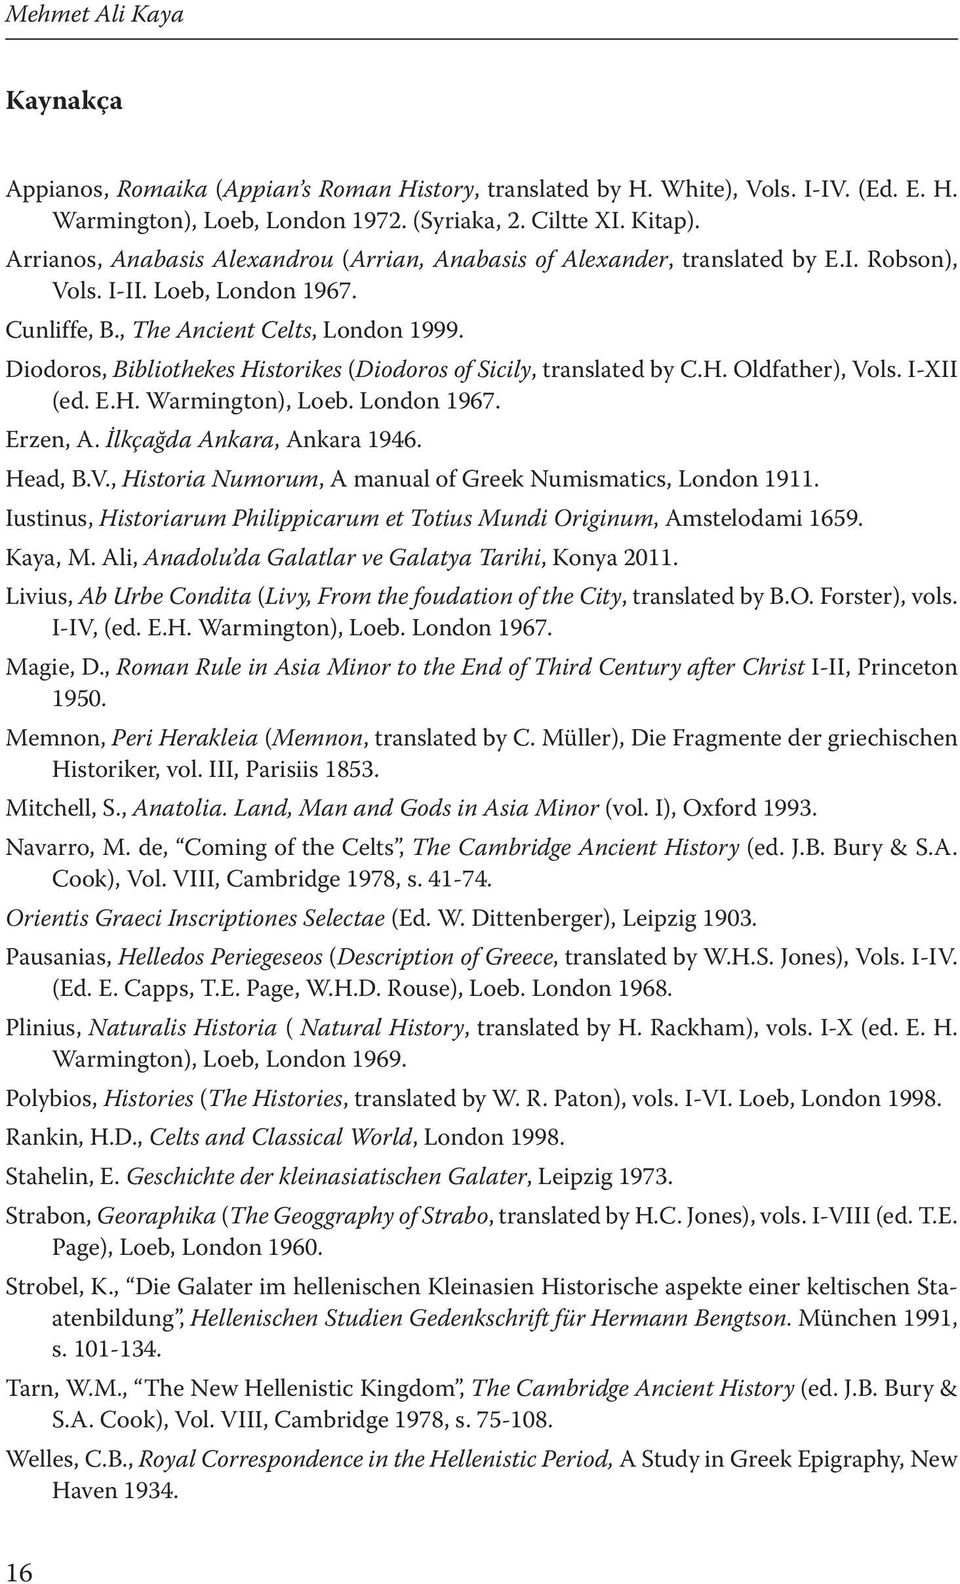 Diodoros, Bibliothekes Historikes (Diodoros of Sicily, translated by C.H. Oldfather), Vols. I-XII (ed. E.H. Warmington), Loeb. London 1967. Erzen, A. İlkçağda Ankara, Ankara 1946. Head, B.V., Historia Numorum, A manual of Greek Numismatics, London 1911.